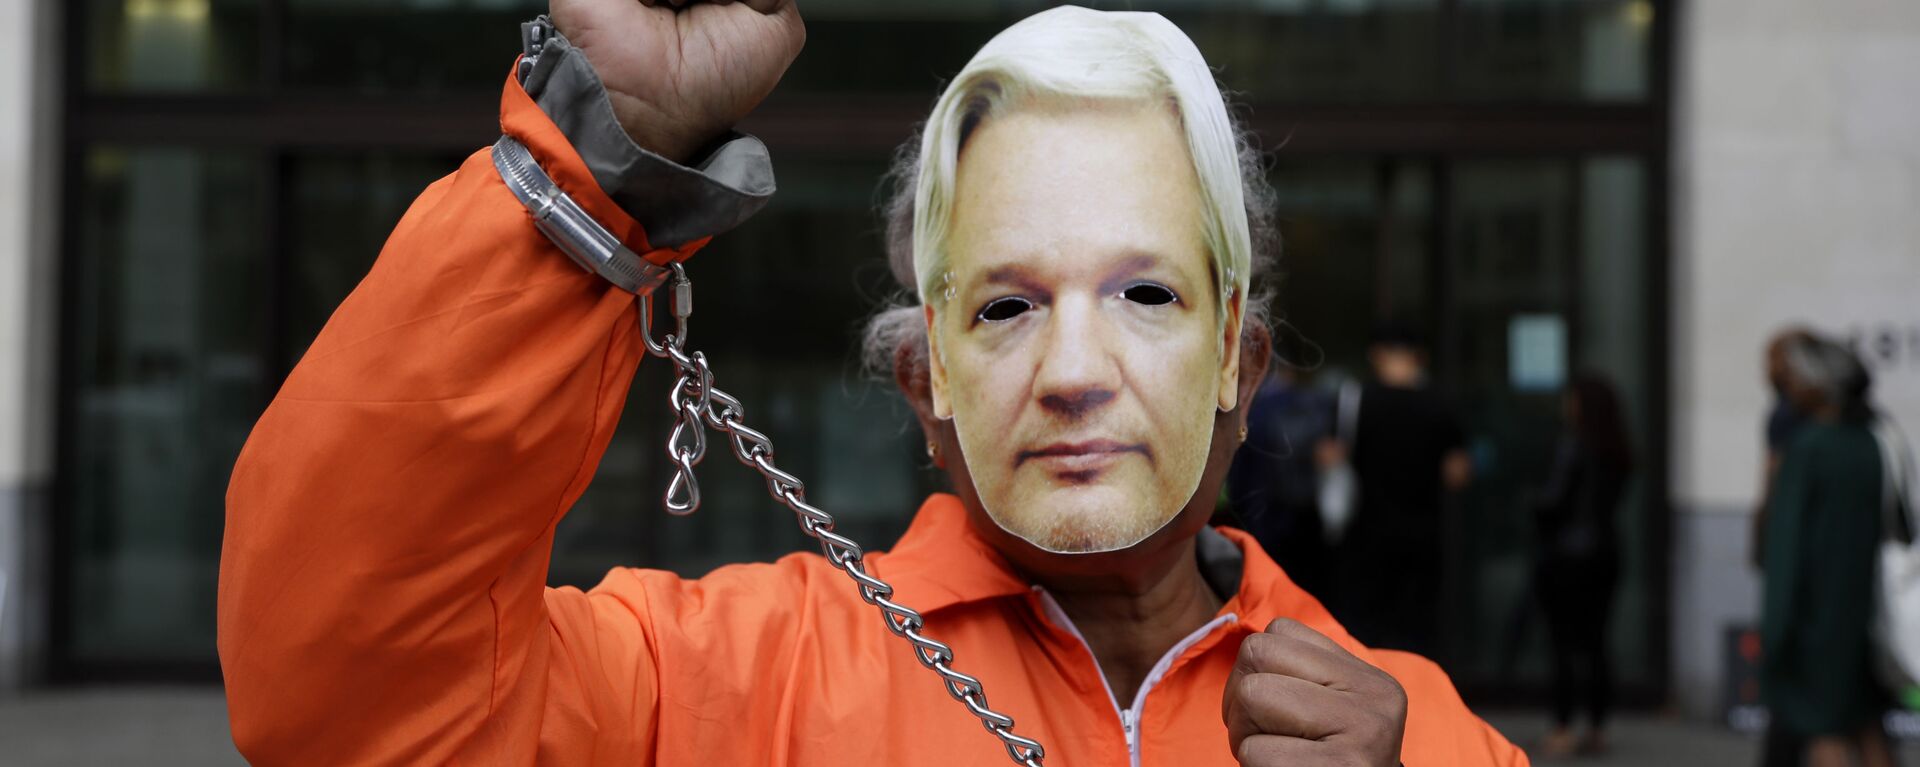 Un manifestante por la liberación del fundador de Wikileaks, Julian Assange - Sputnik Mundo, 1920, 03.01.2021